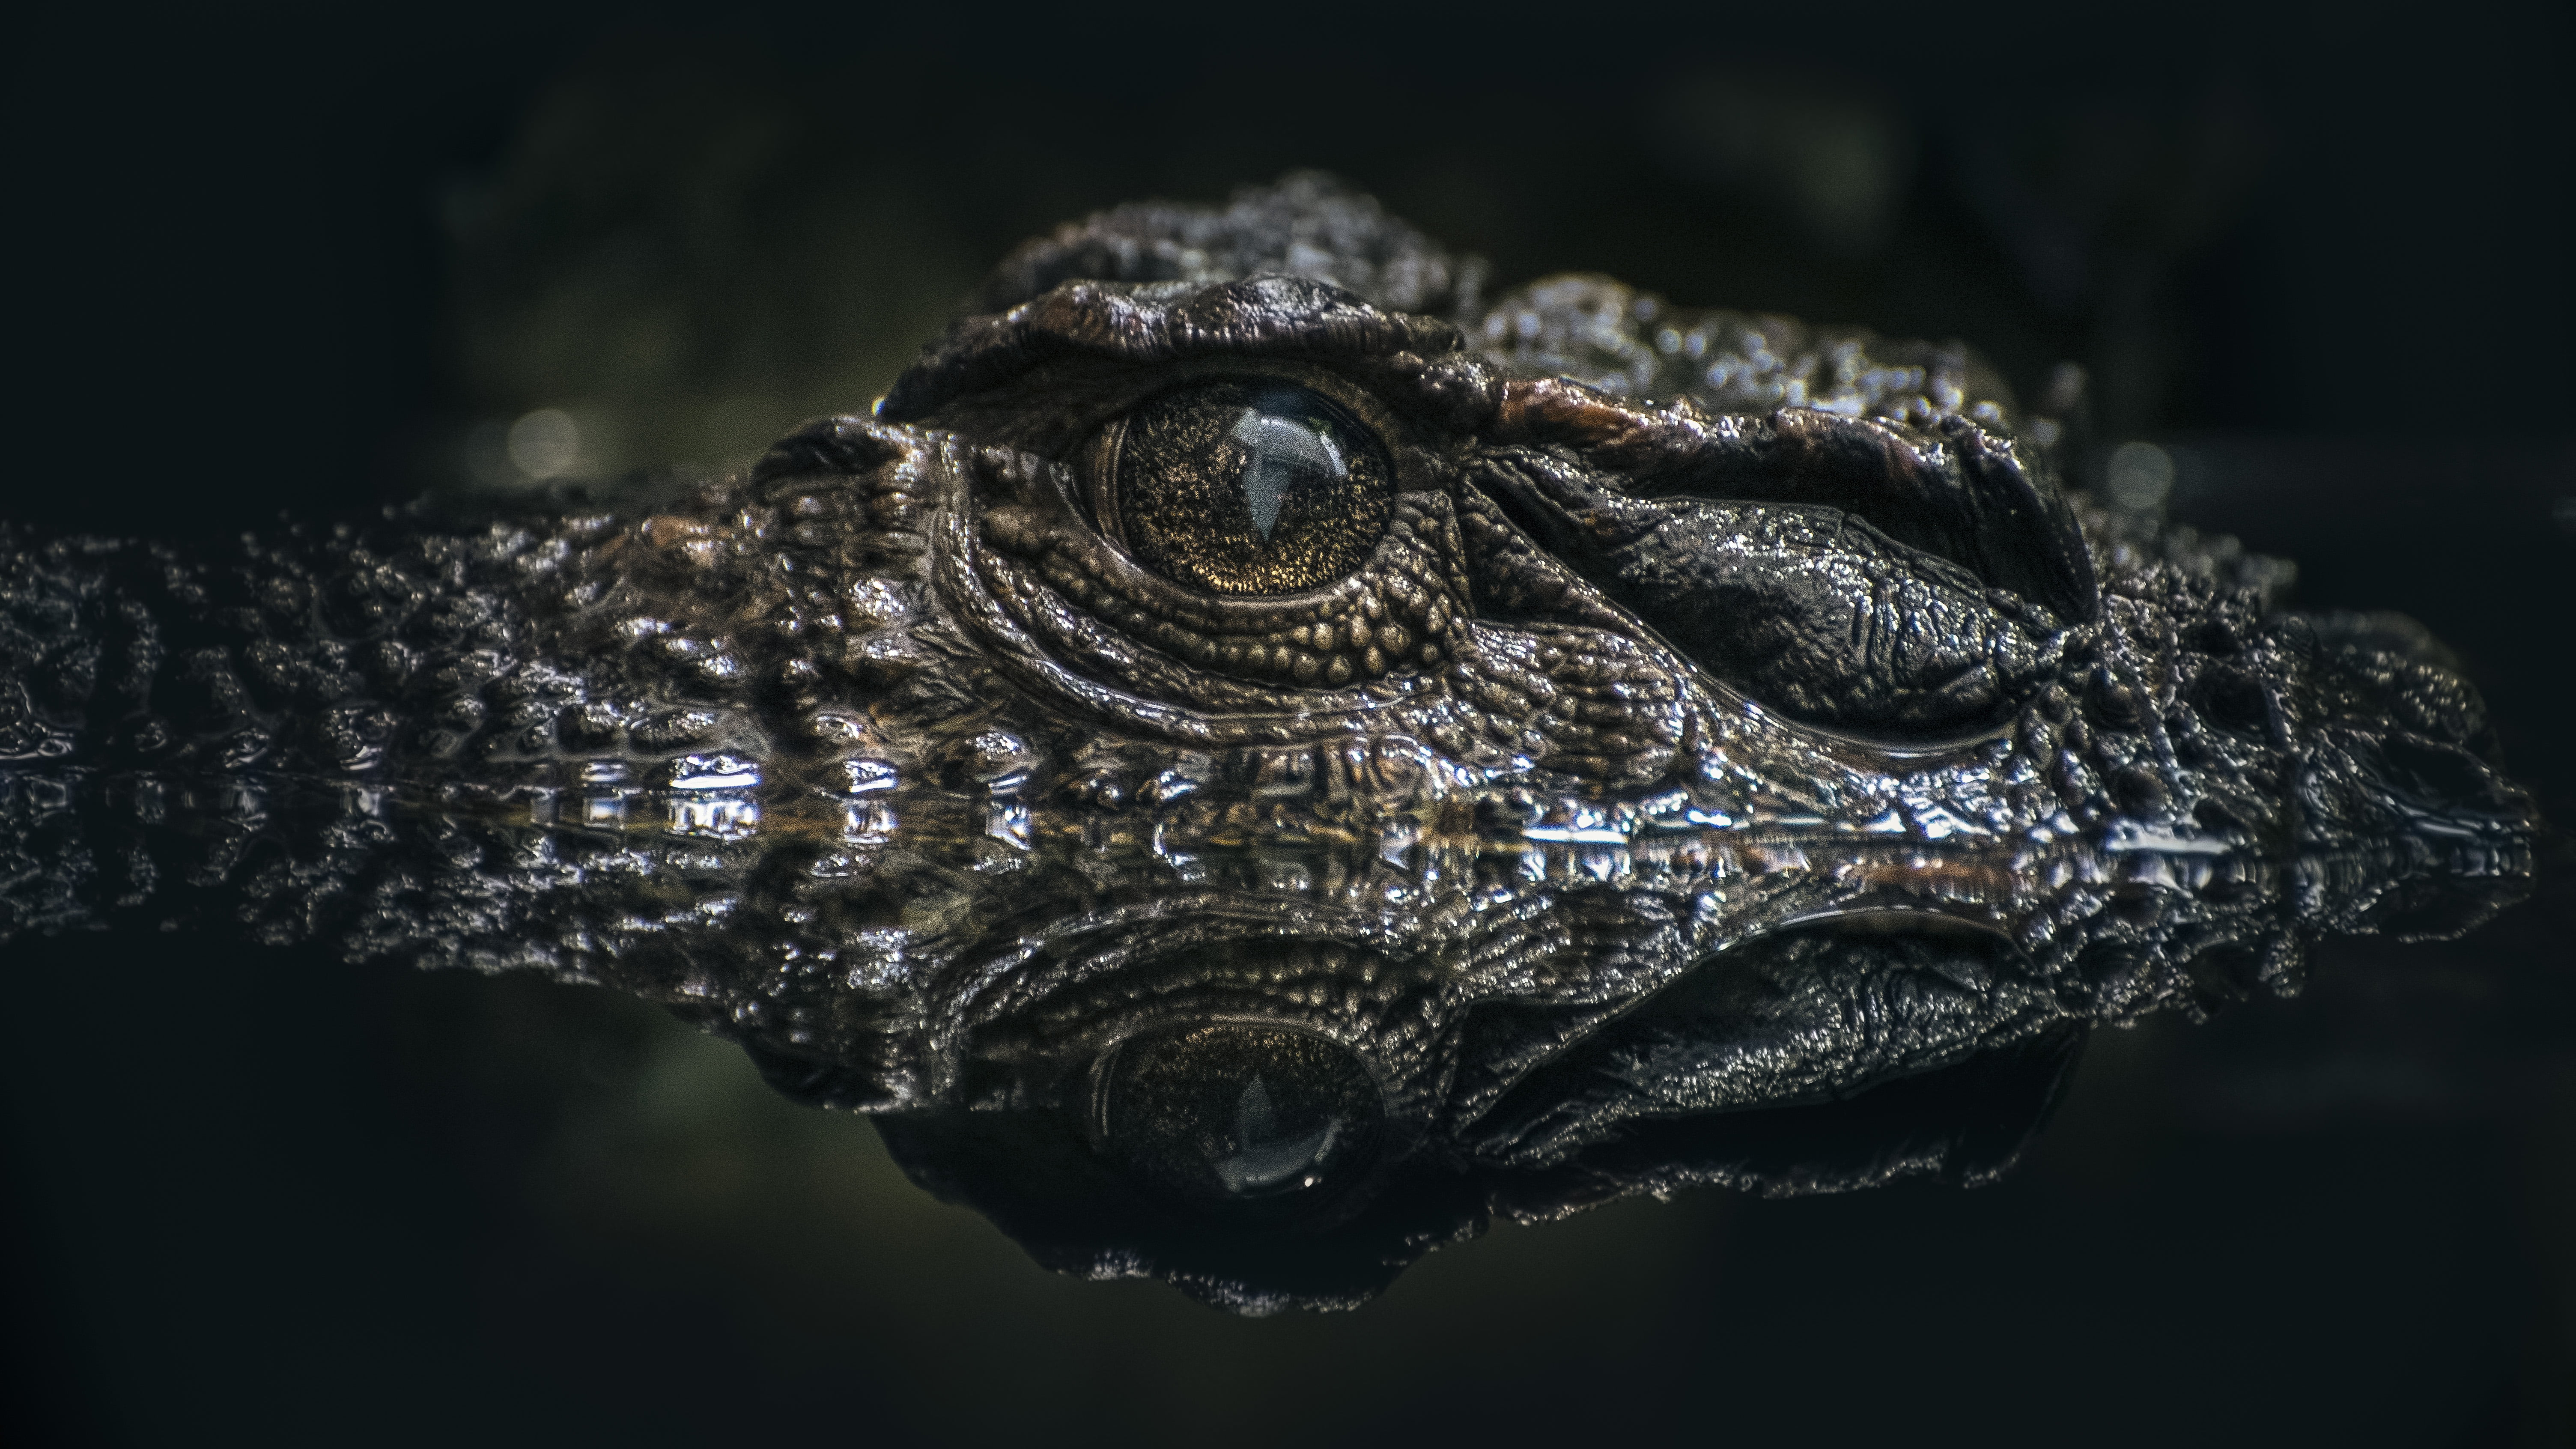 bokeh effect of Alligator eye on water, Lurking, Croc, Crocodile